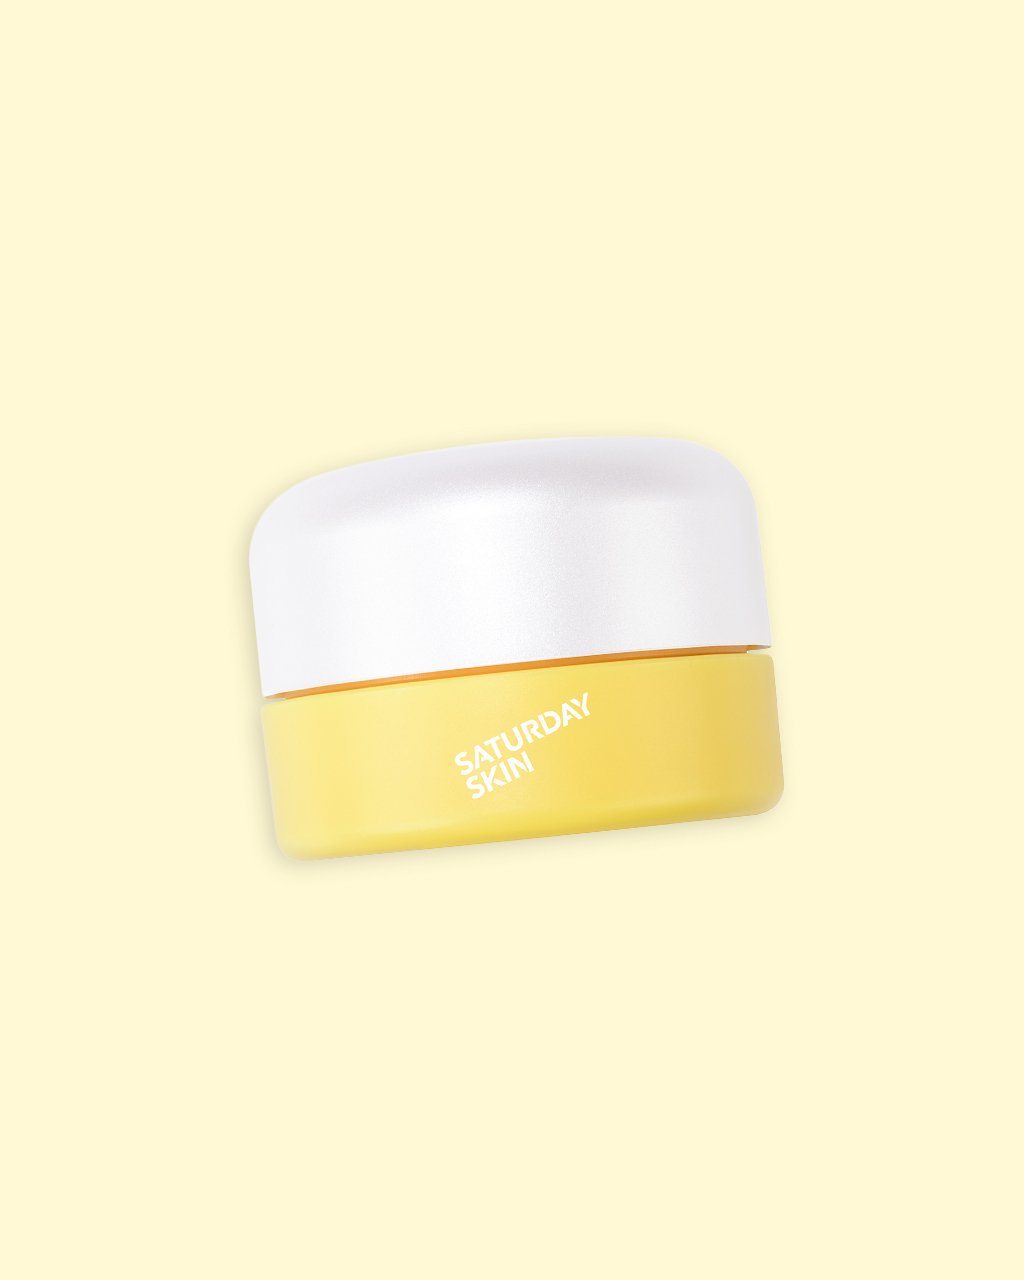 Yuzu Vitamin C Bright Eye Cream Product Image